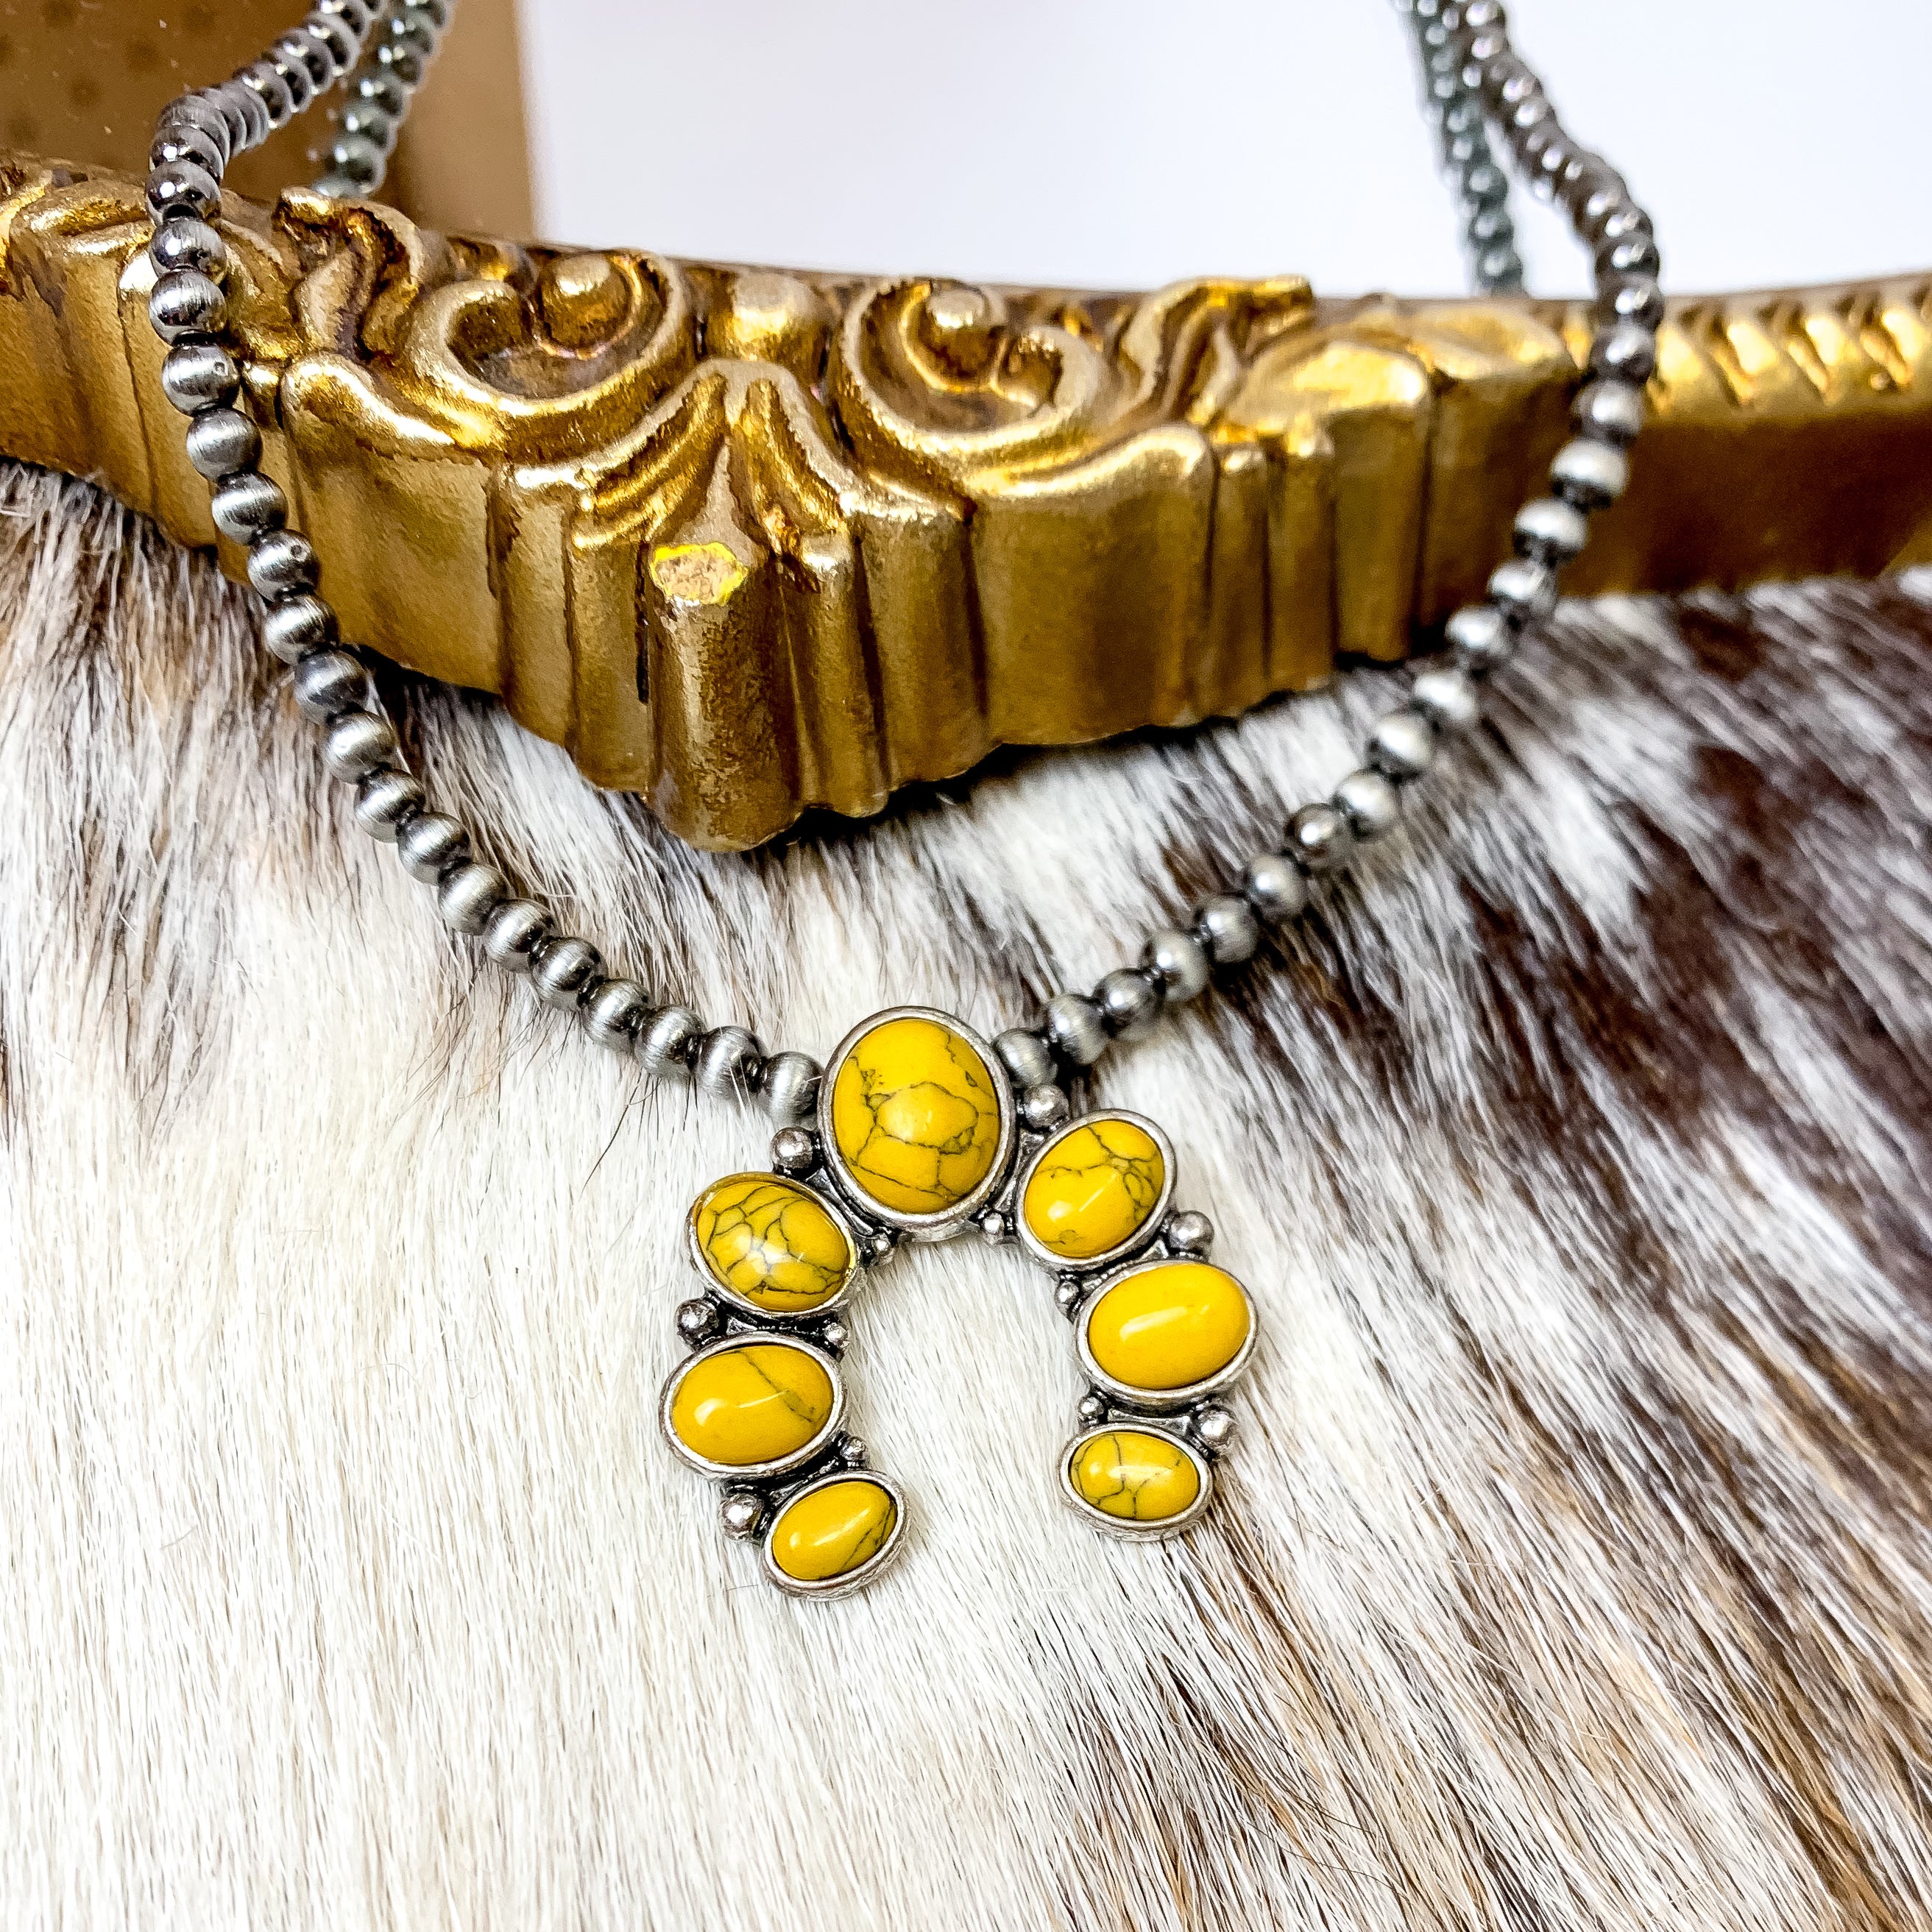 Small Silver Tone Faux Navajo Pearl Choker Necklace with Yellow Stone Naja Pendant